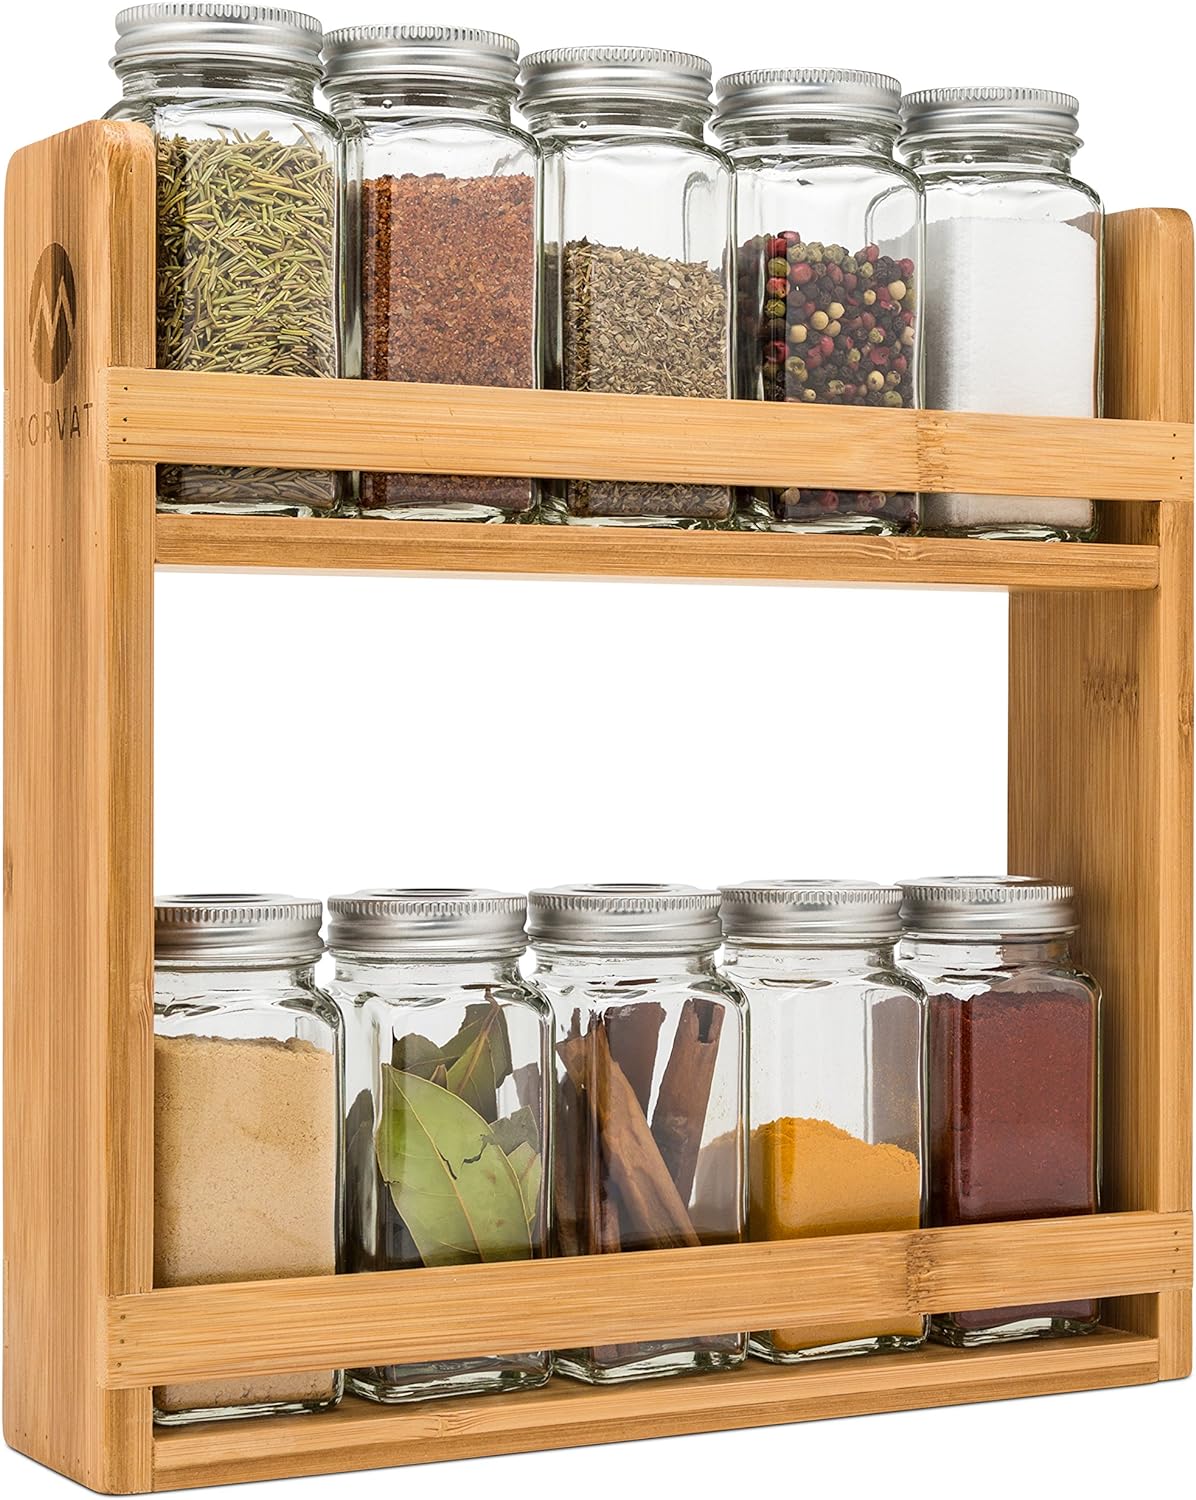 Standing Spice Rack,Seasoning jar Makeup Jewelry Dish Storage Organizer Shelf 